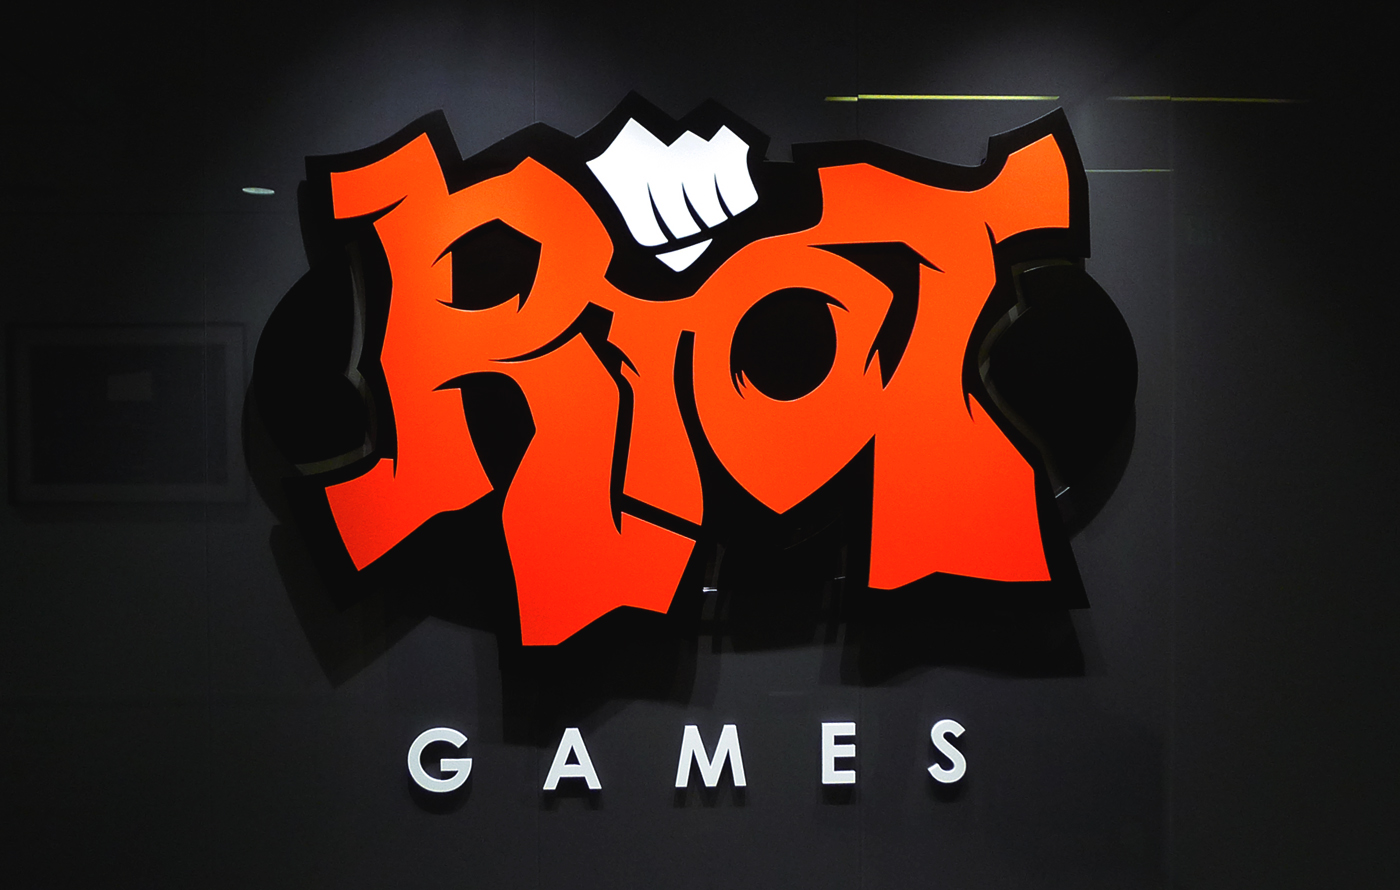 Riot games личный